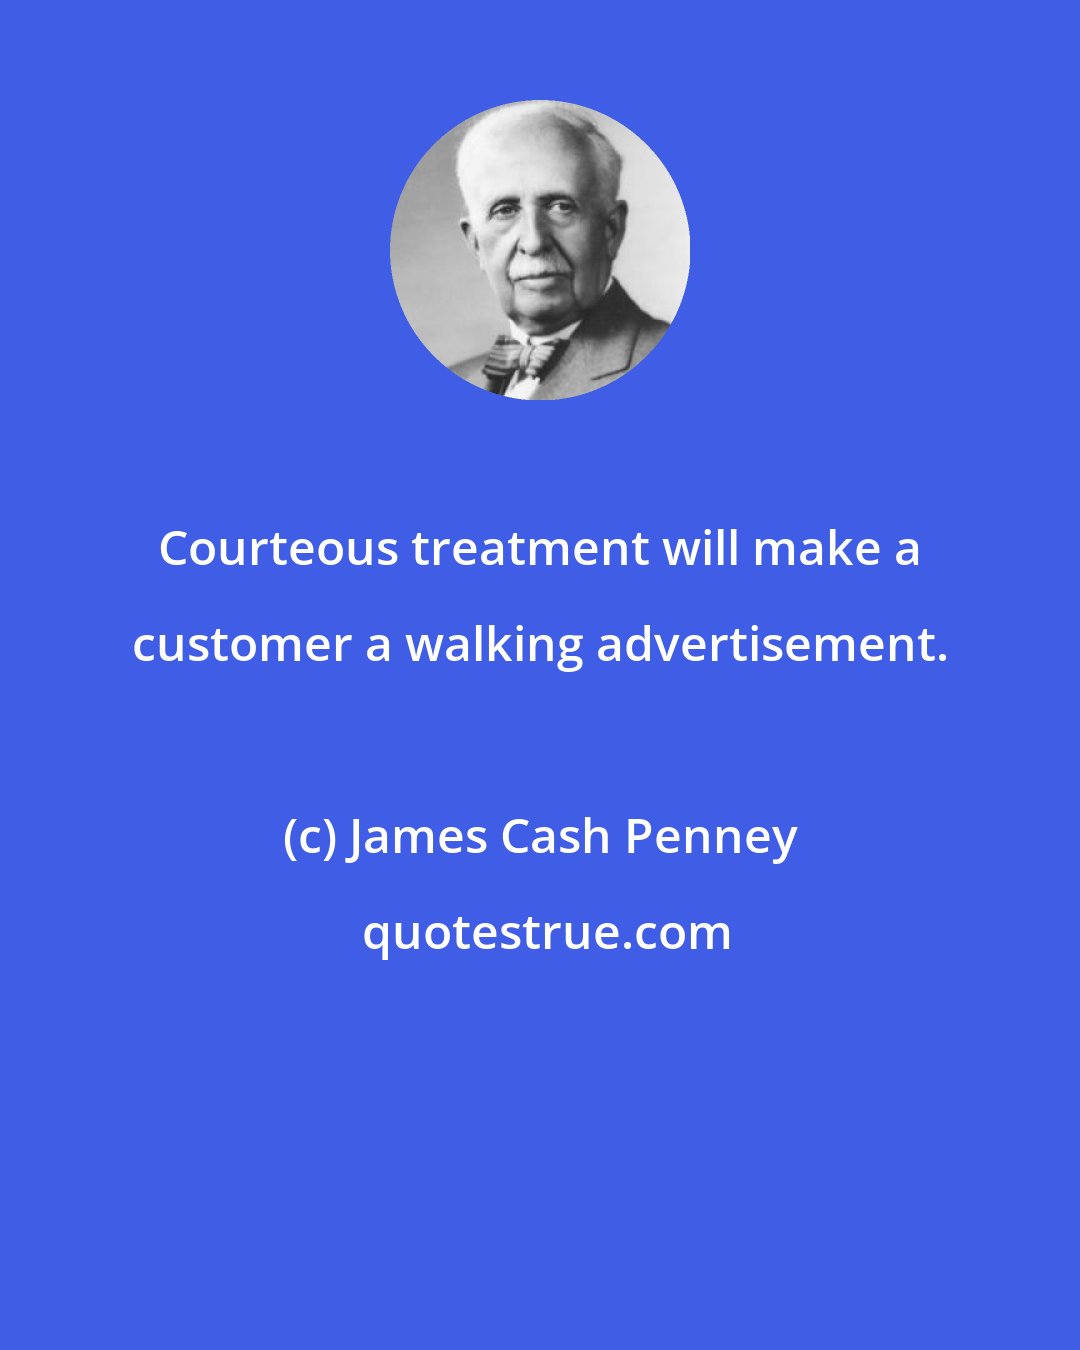 James Cash Penney: Courteous treatment will make a customer a walking advertisement.